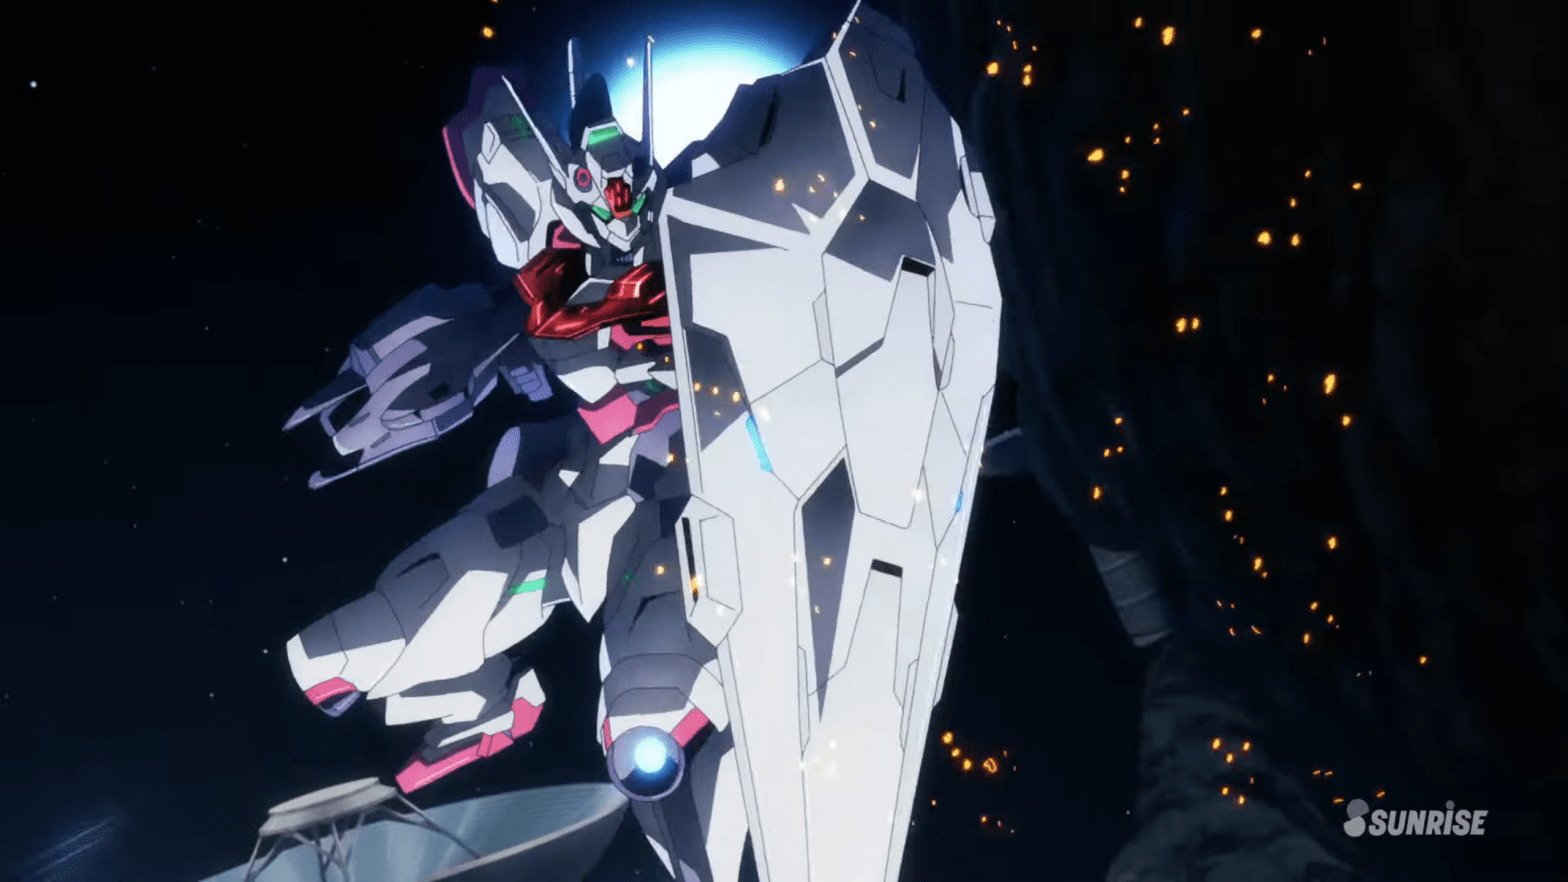 The Gundam Lfrith takes flight. (Screenshot: Sunrise)